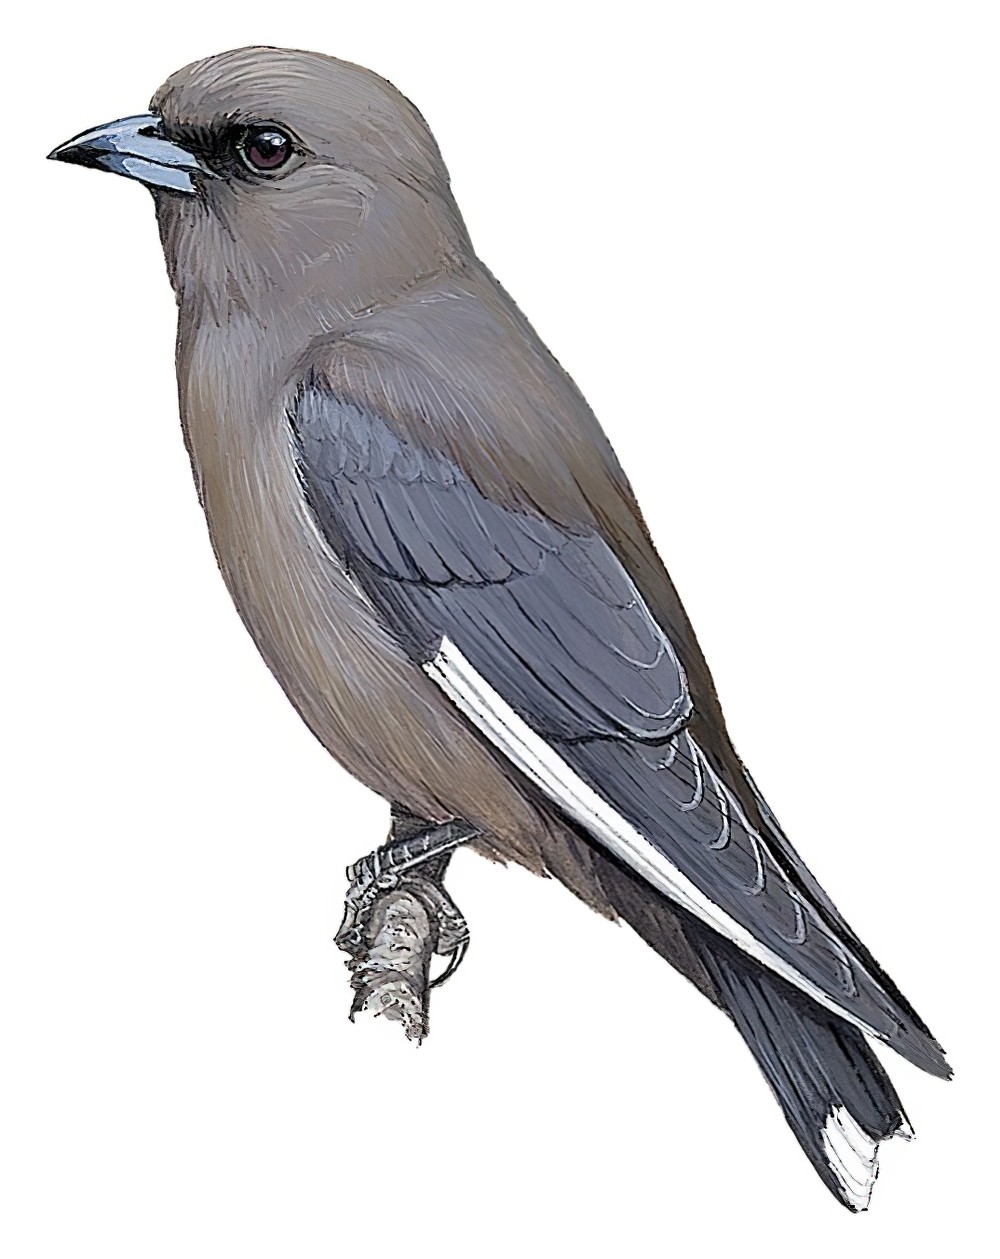 Dusky Woodswallow / Artamus cyanopterus